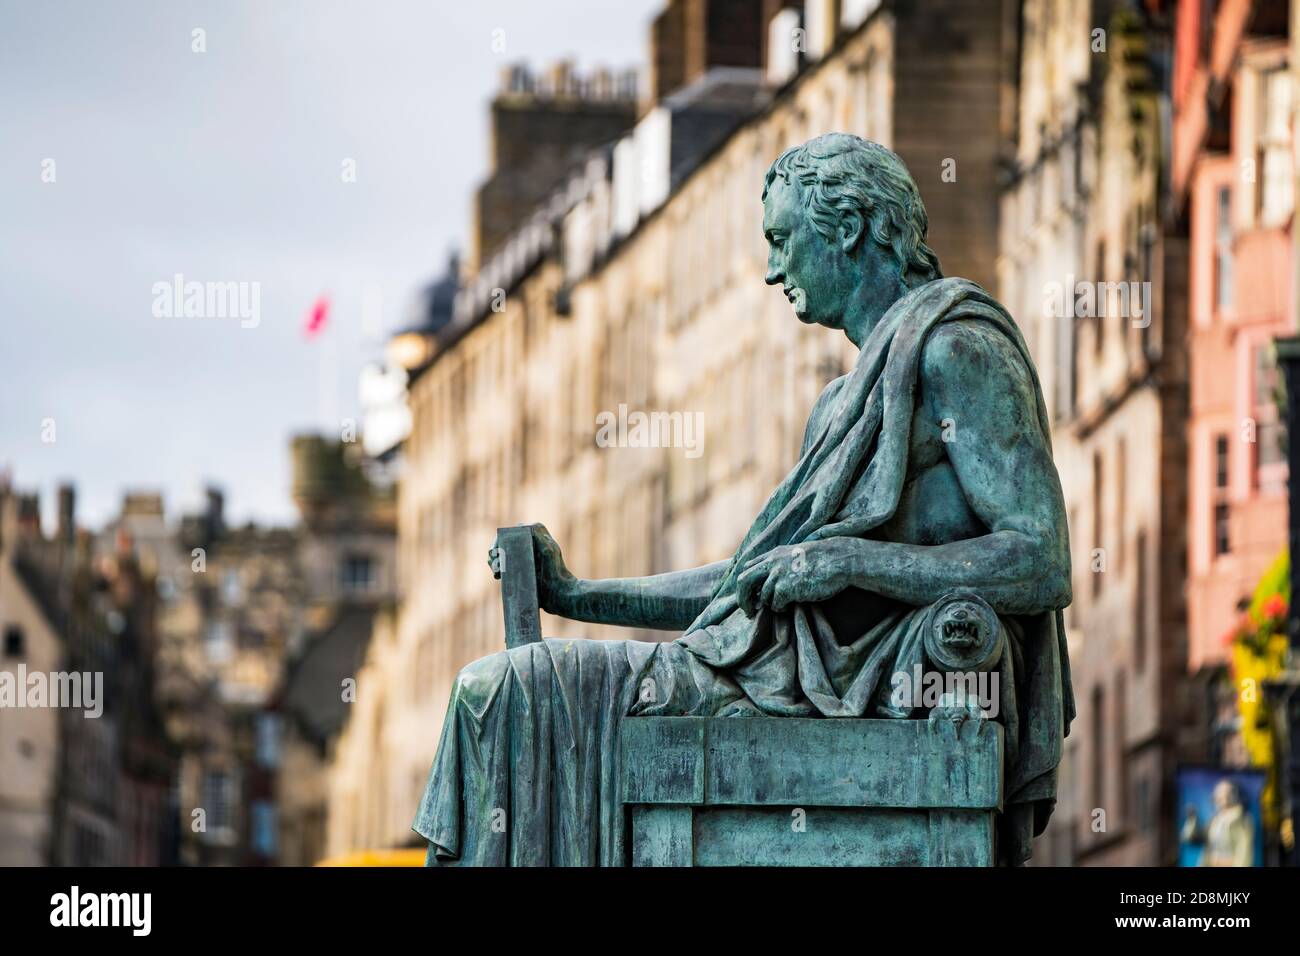 Statue of David Hume philosopher on Royal Mile in Edinburgh, Scotland, UK Stock Photo